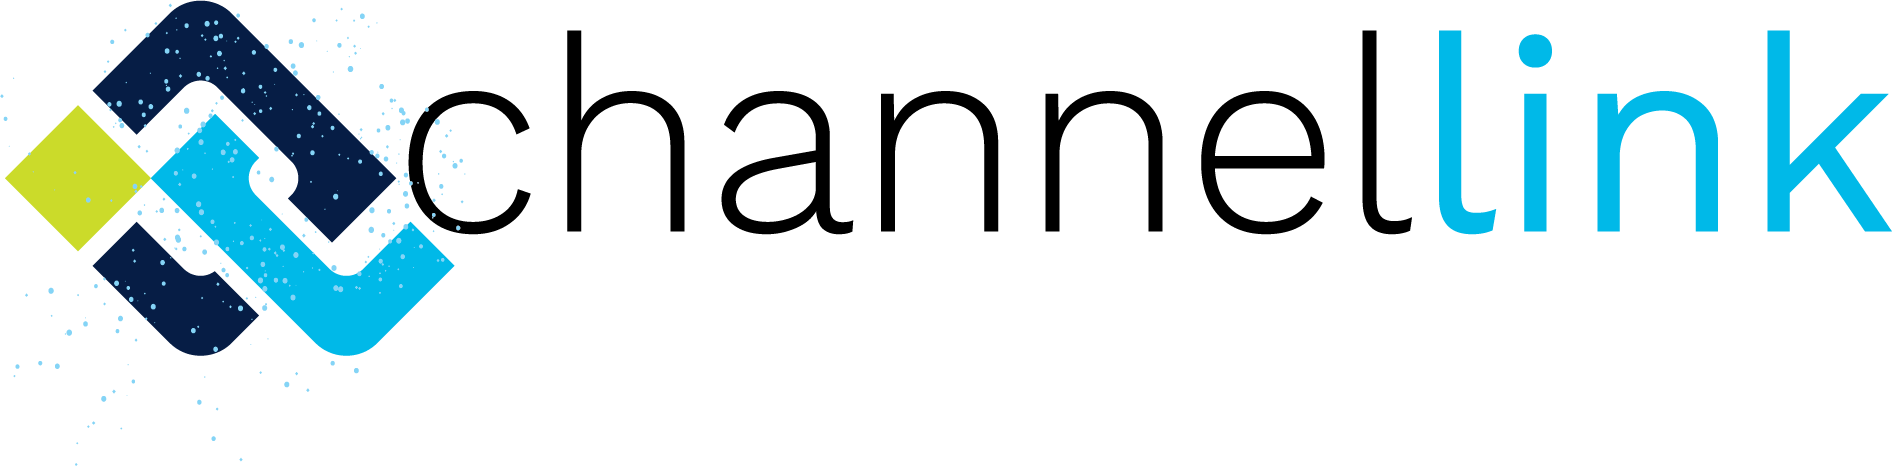 Channel Link logo